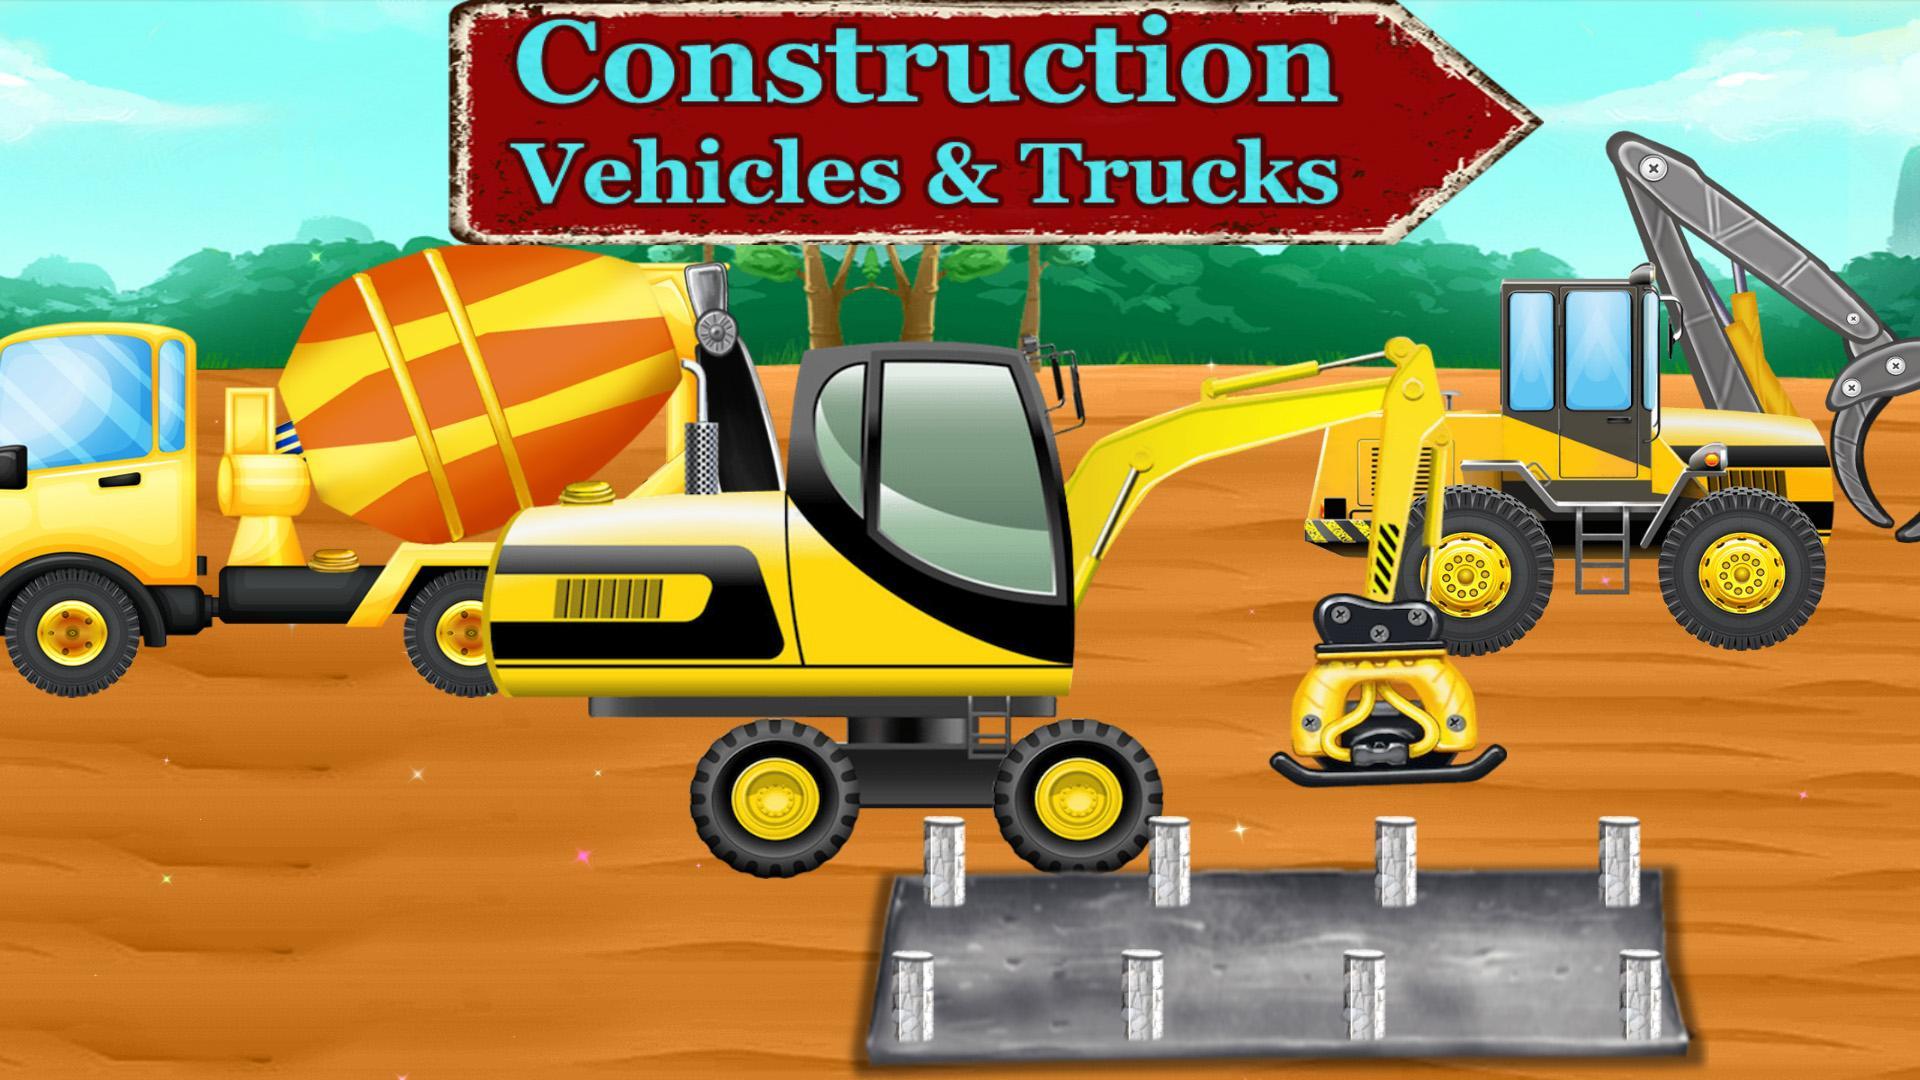 Construction Vehicles & Trucks - Games for Kids 1.9.0 Screenshot 1